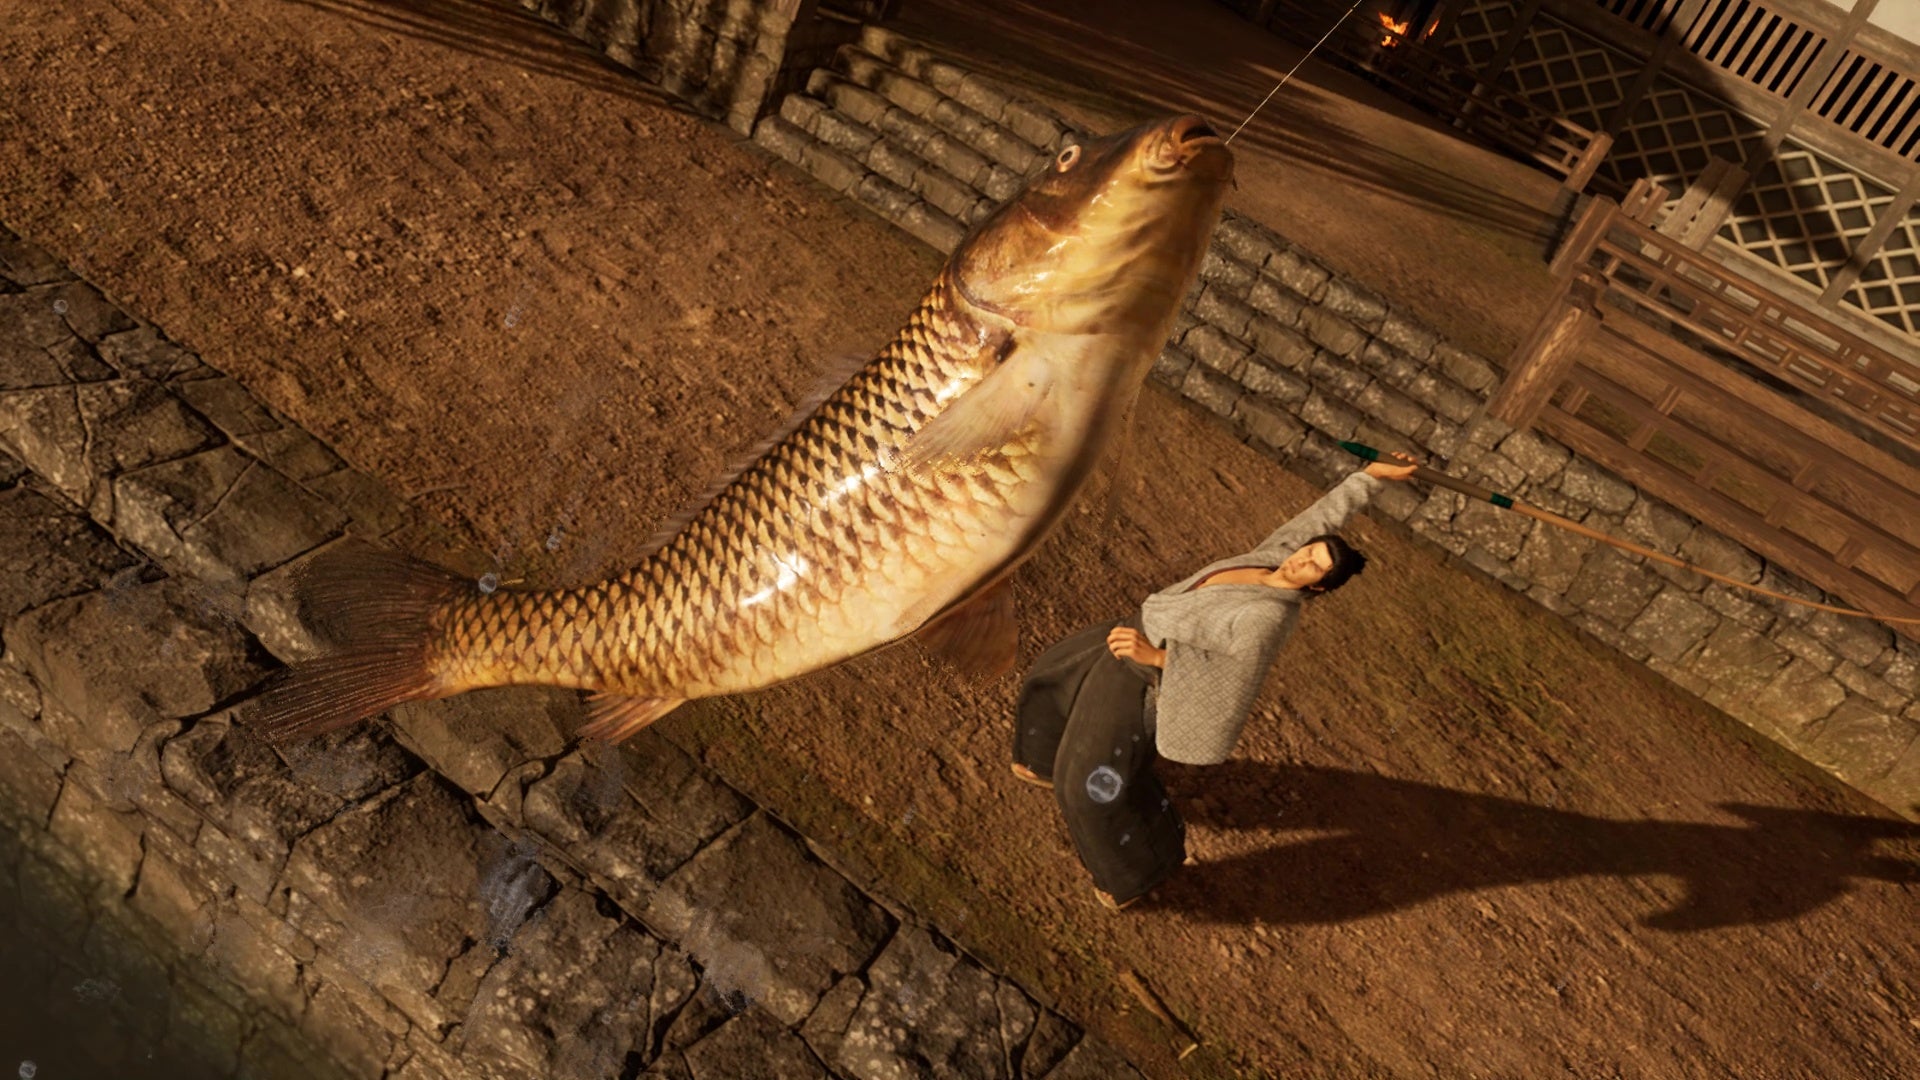 Ryoma catches a big fish in Like A Dragon Ishin!